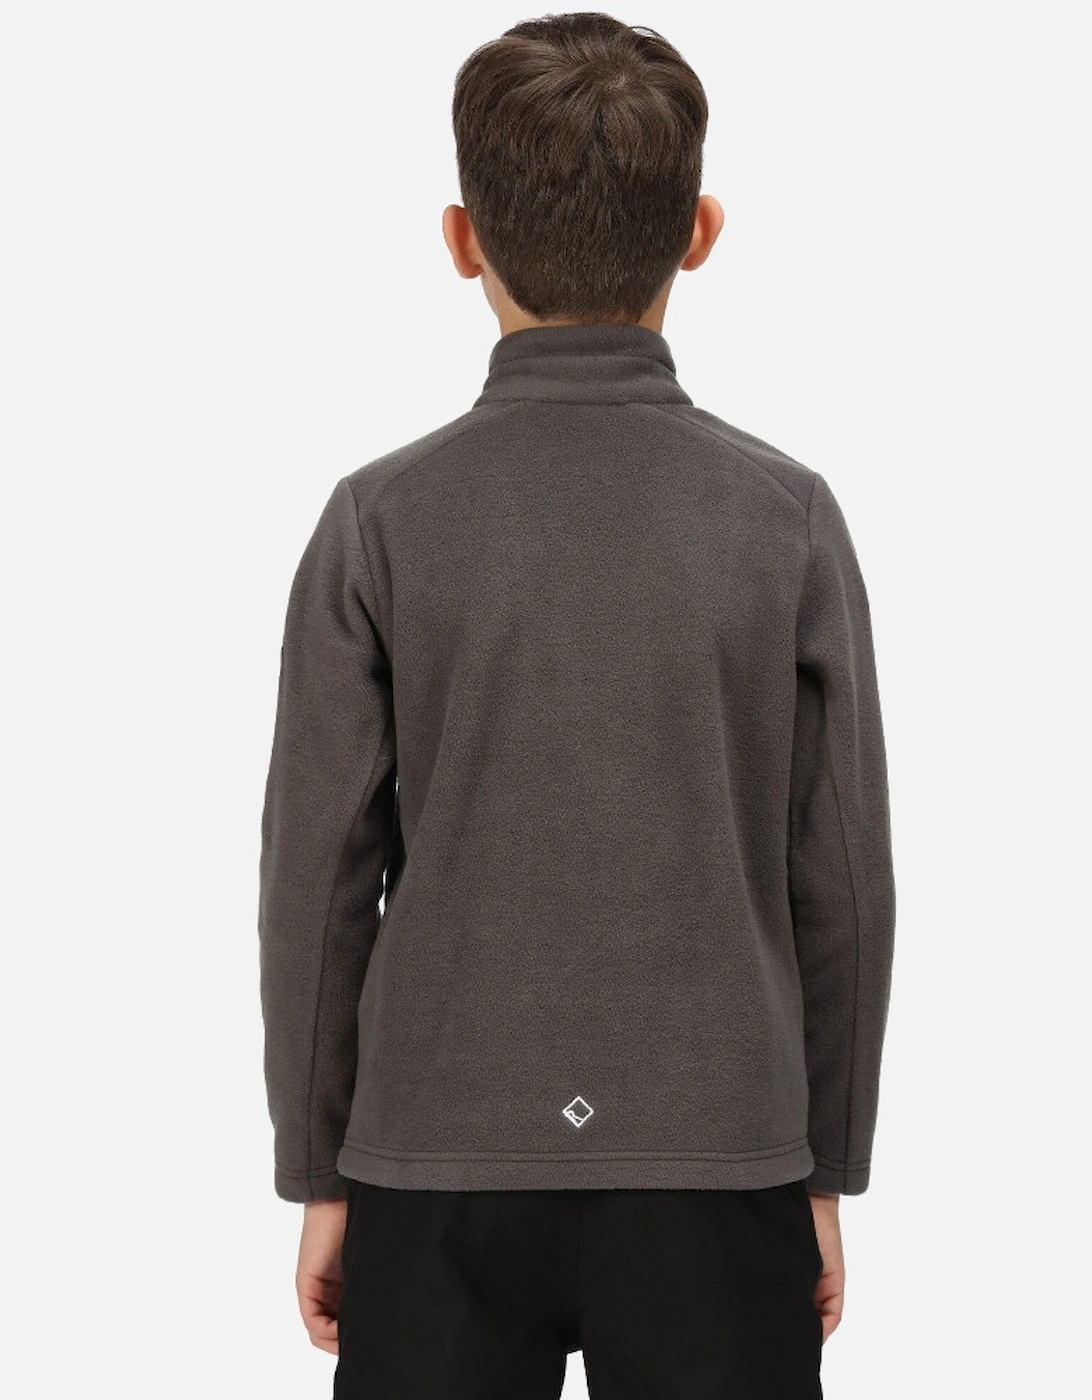 Boys Marlin Vii Full Zip Reflective Fleece Jacket